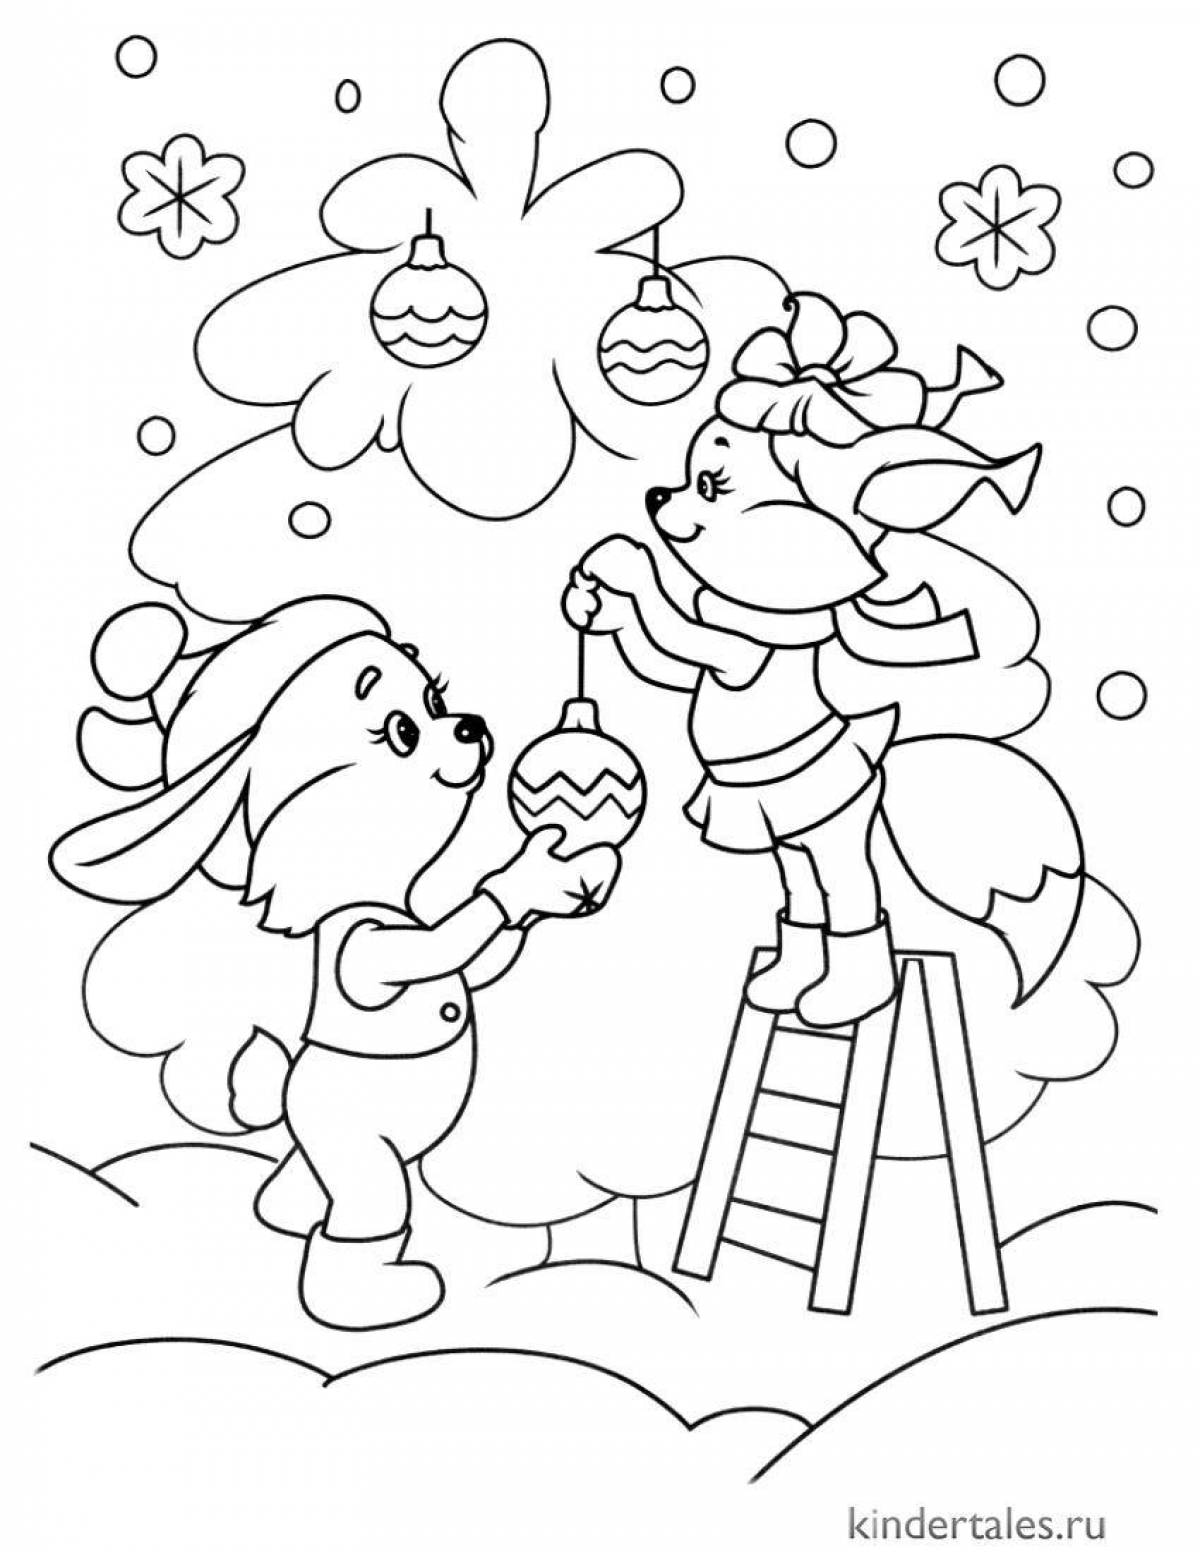 Magic Christmas tree and rabbit coloring book